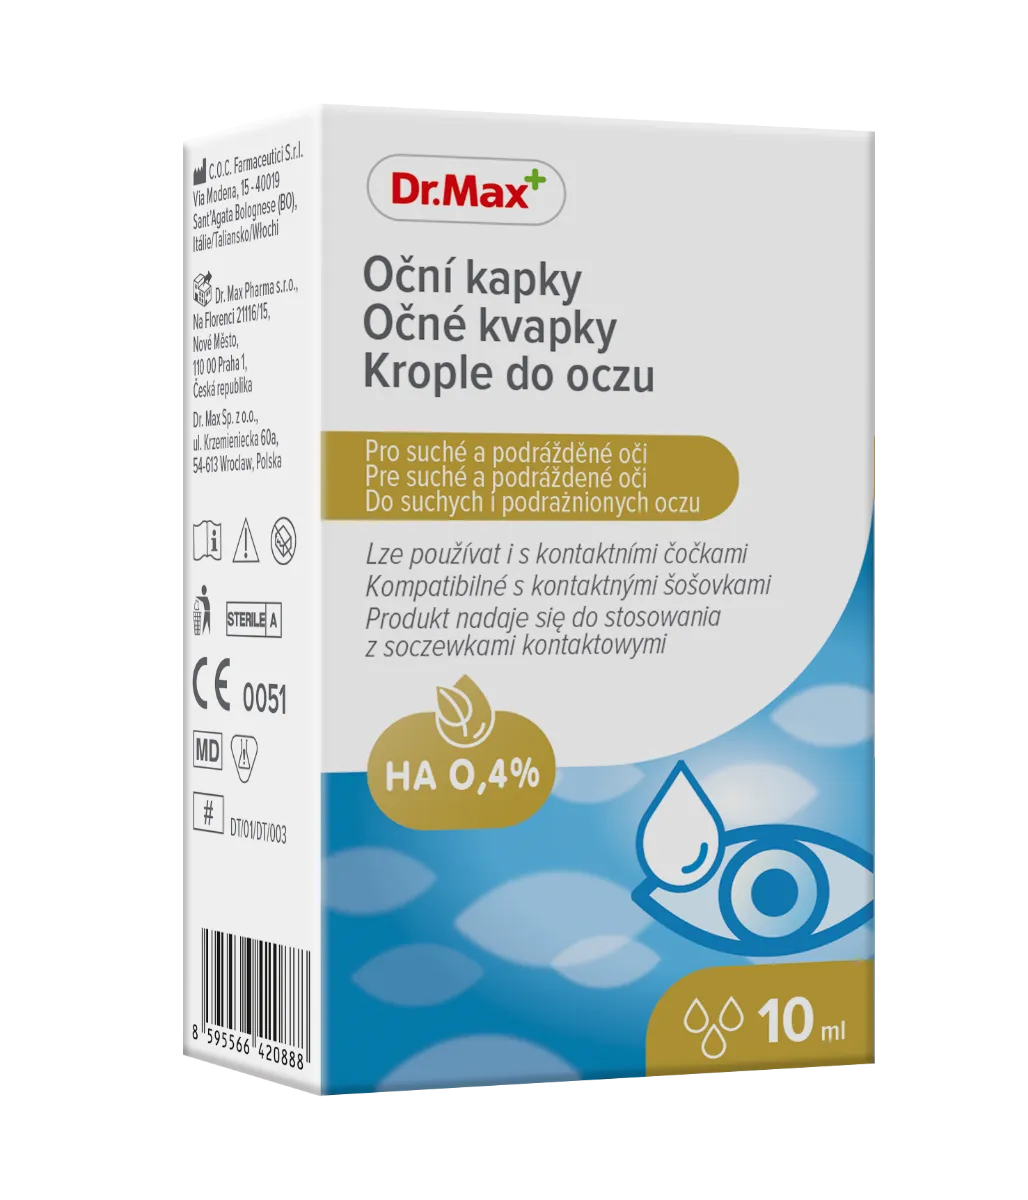 Krople do oczu Dr.Max, 0,4% HA, bez konserwantów, 10 ml